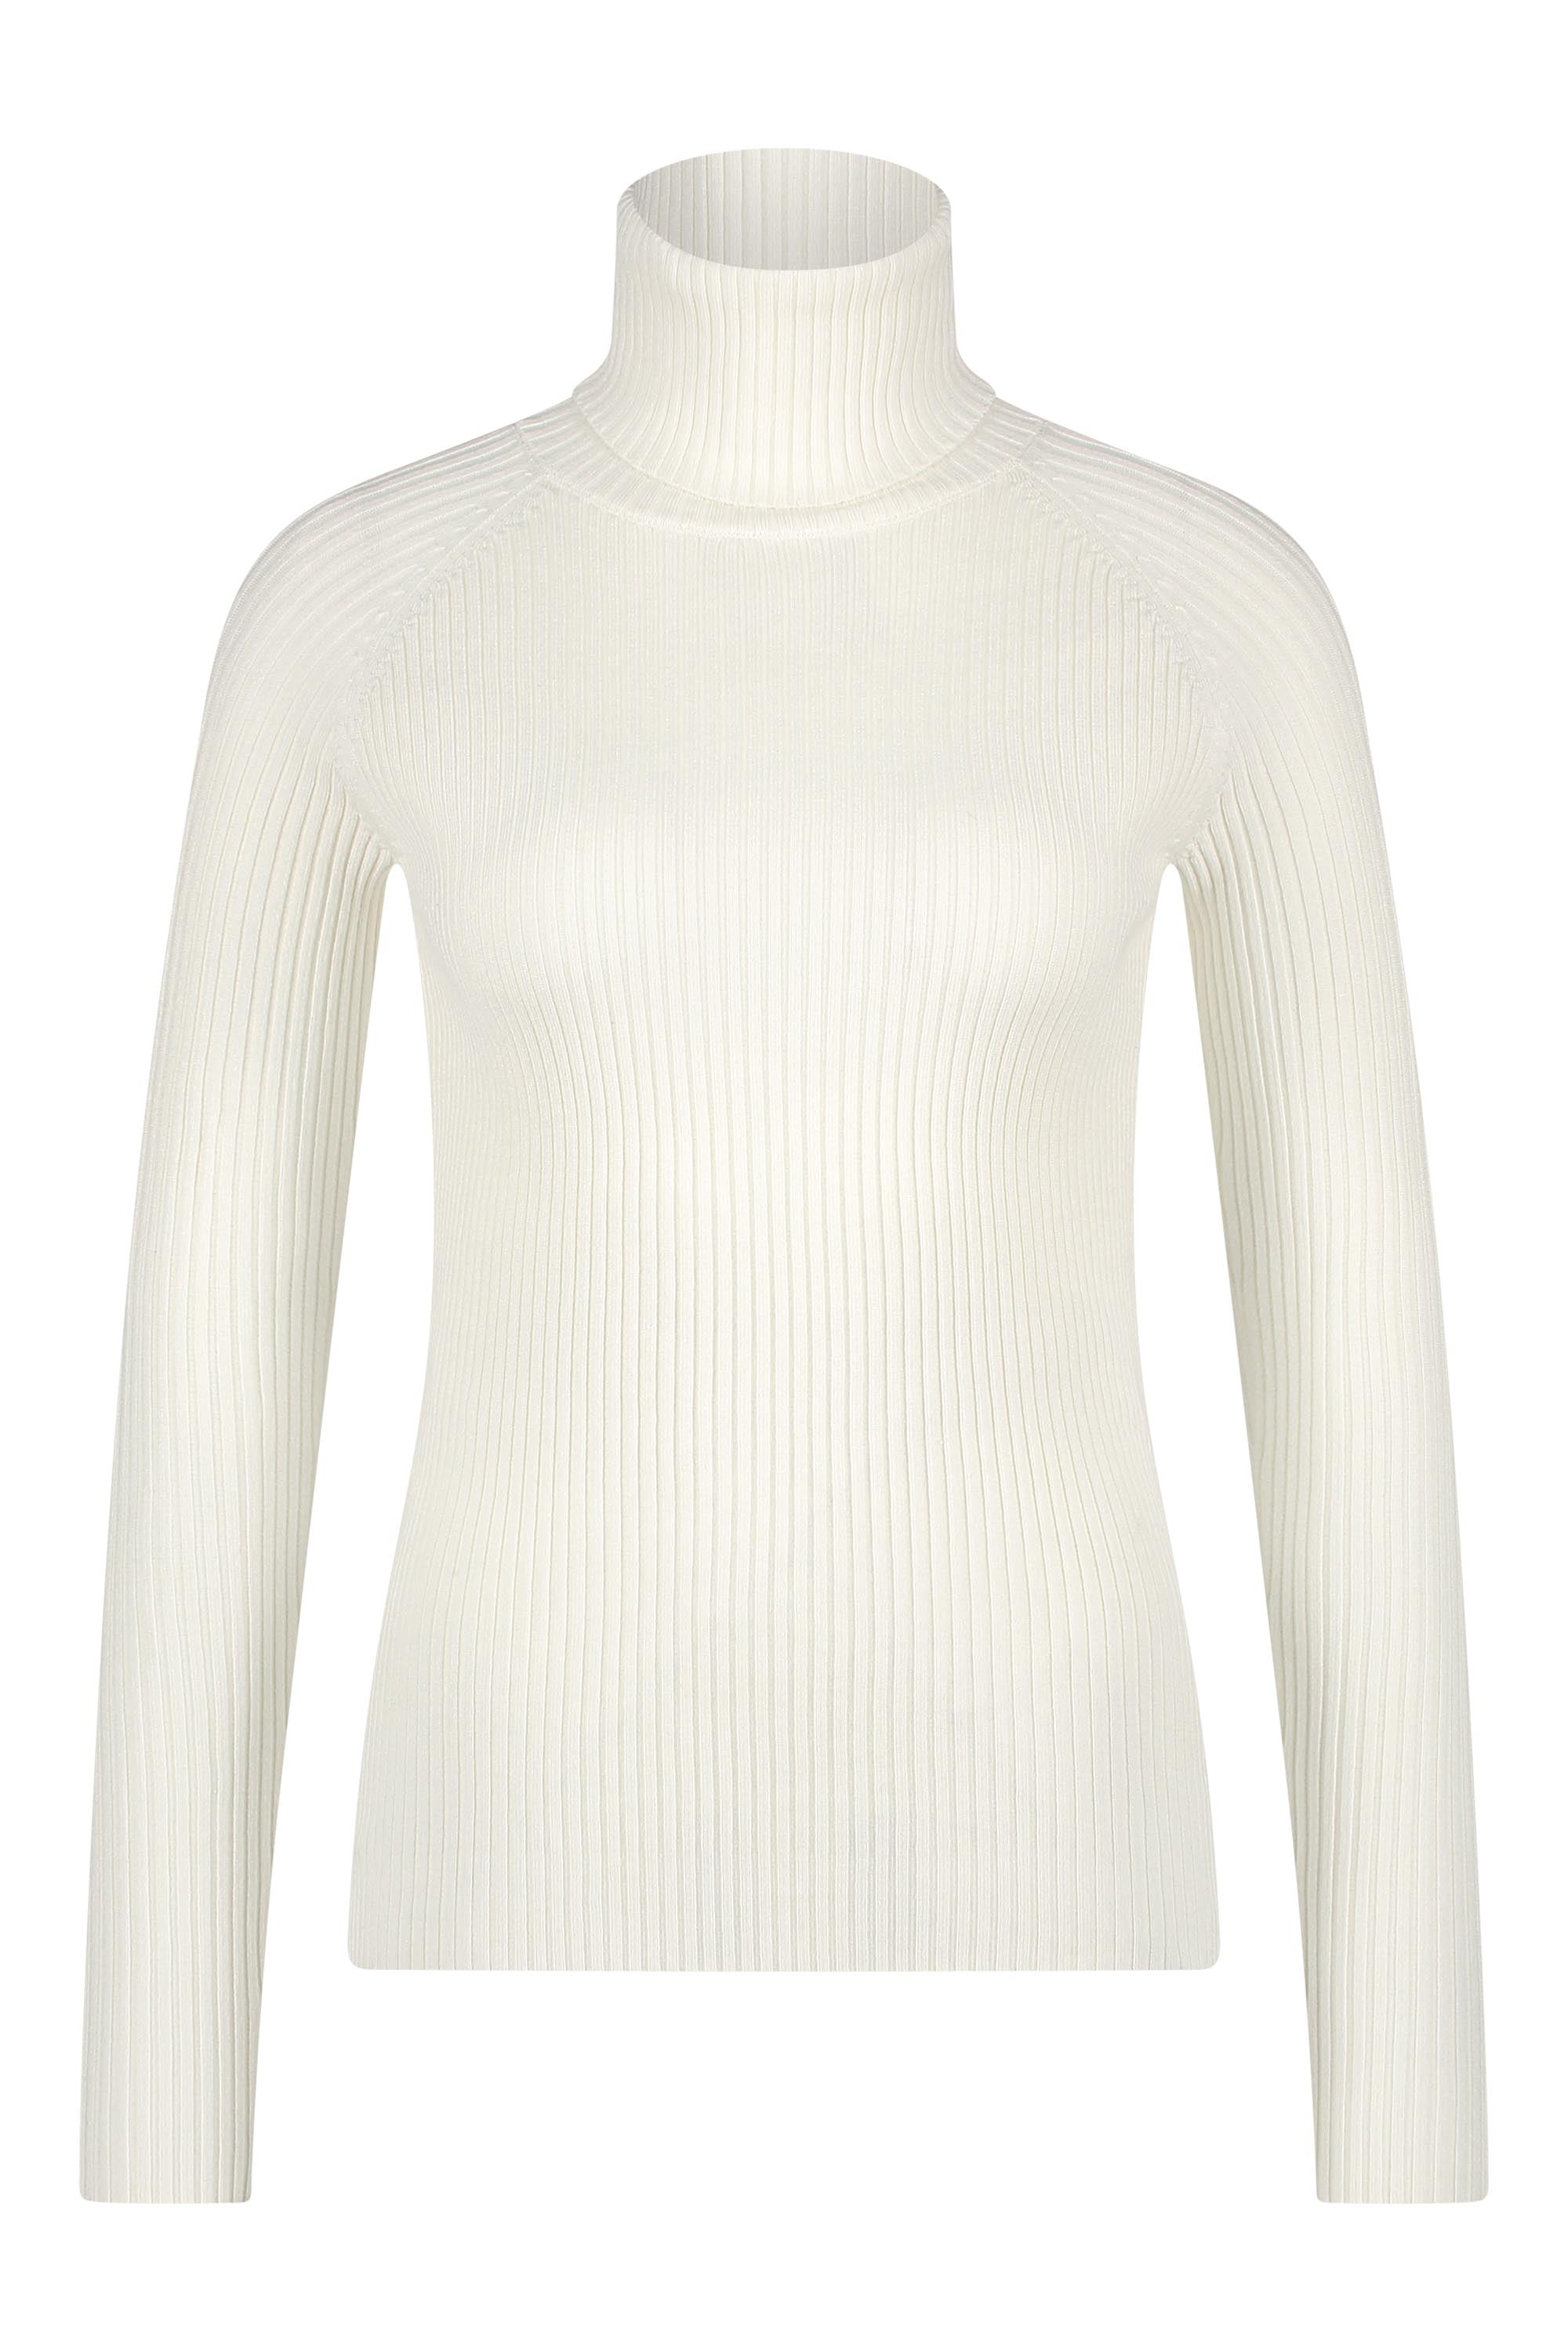 Turtleneck knitwear white